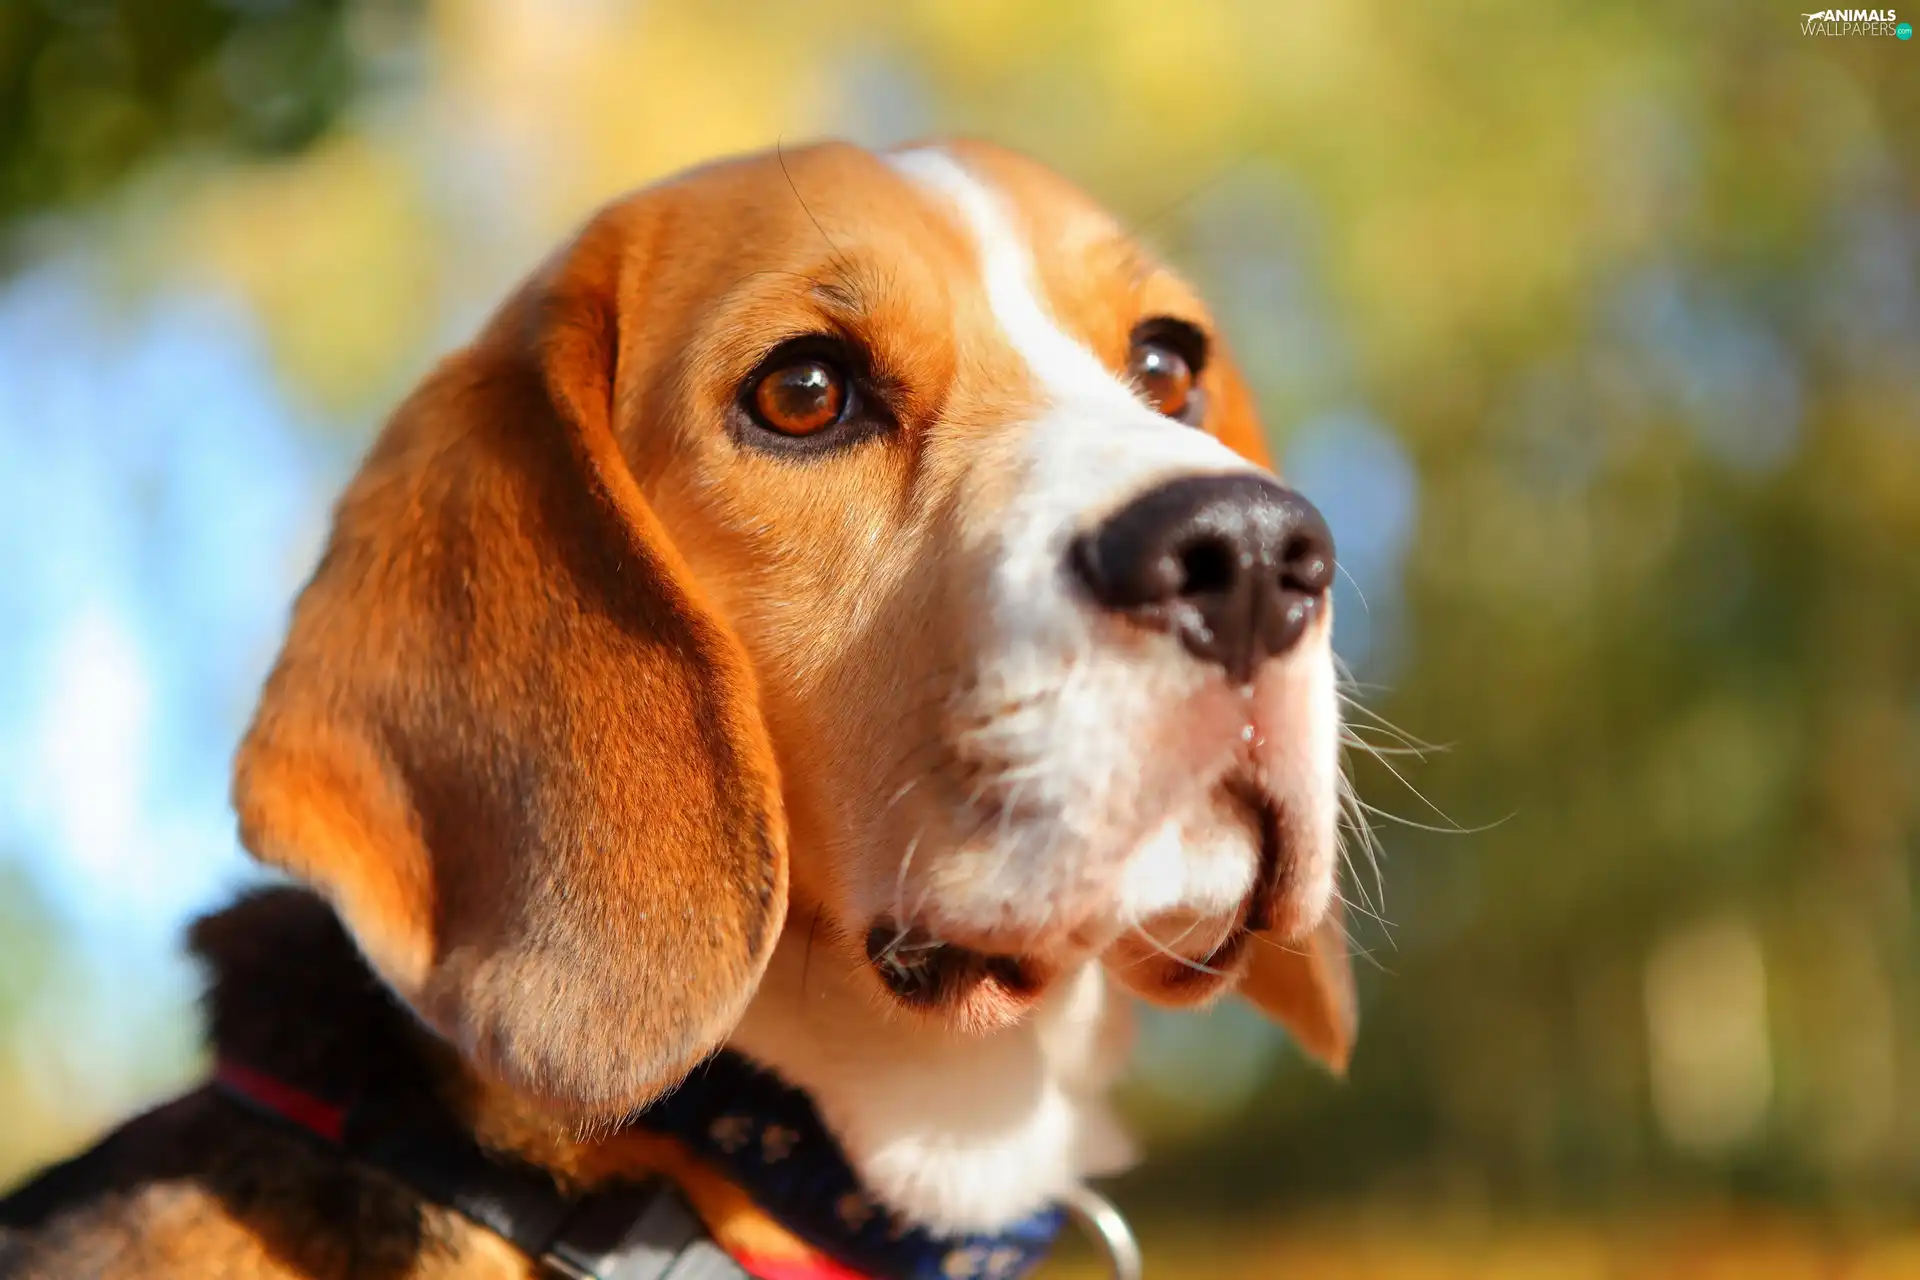 The look, dog, Beagle